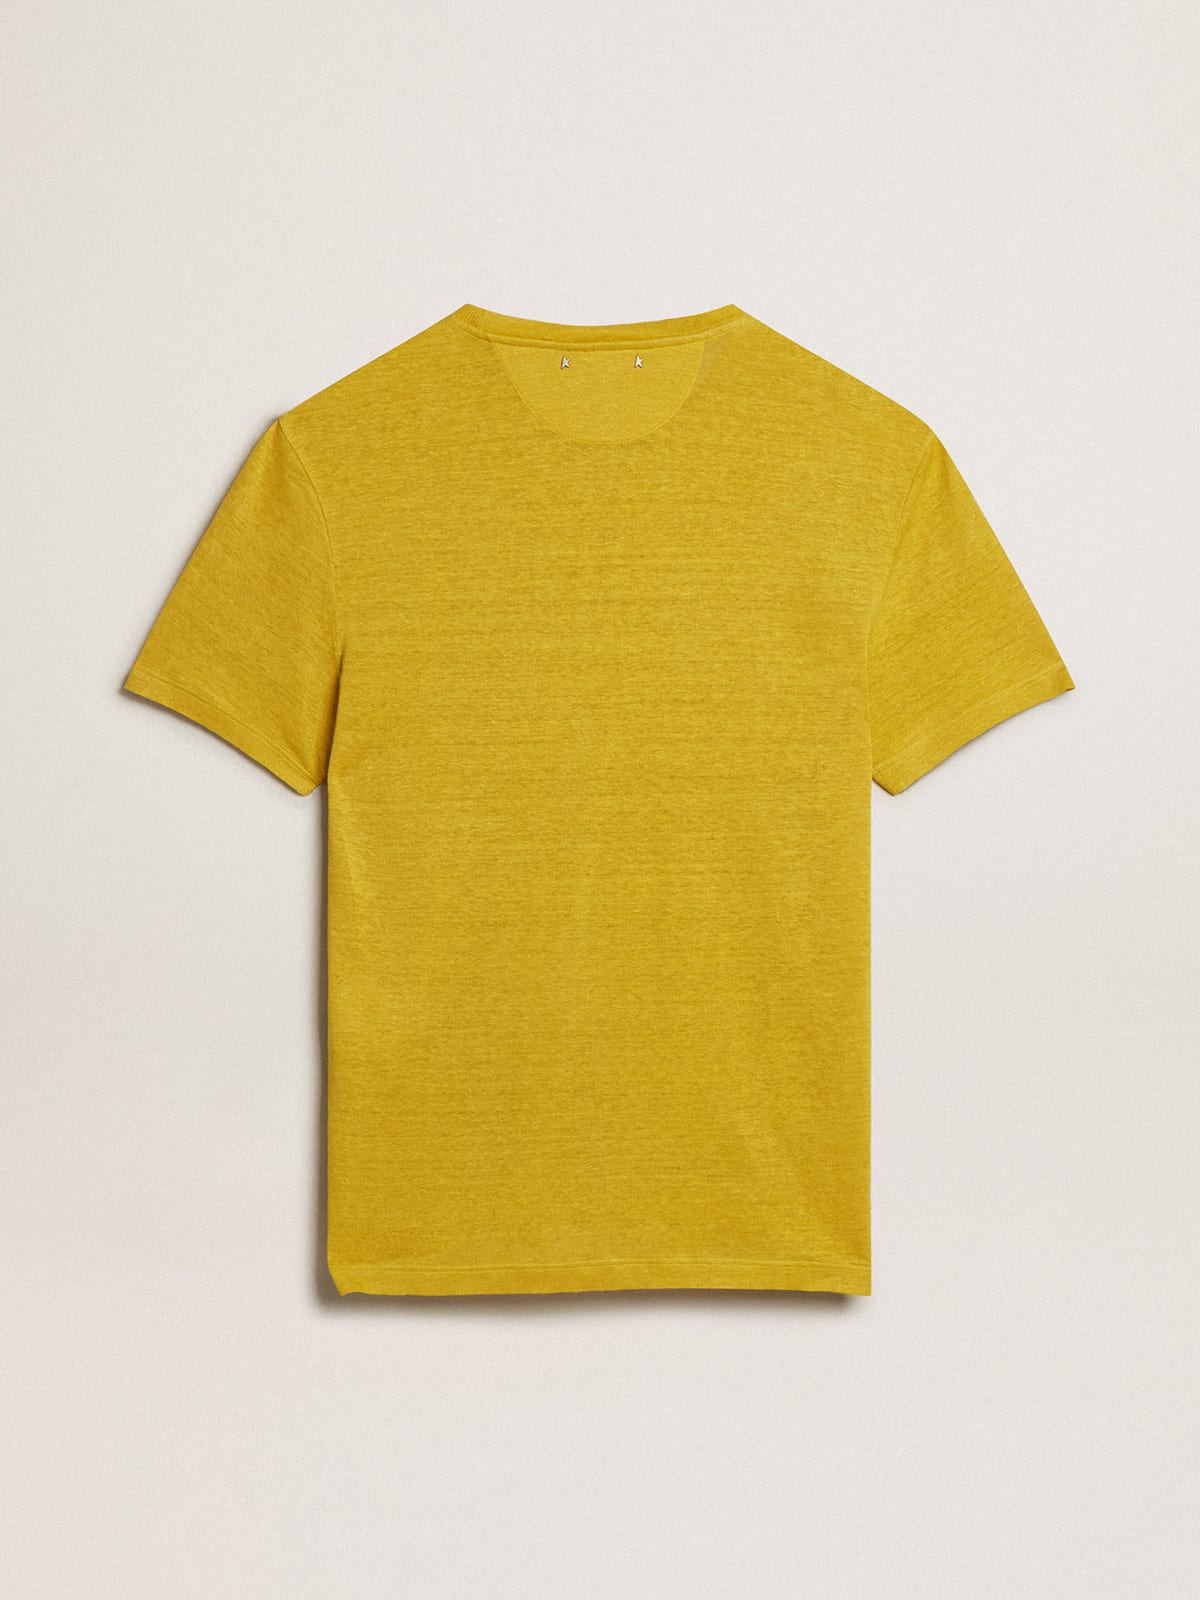 Golden Goose - Men’s T-shirt in maize-yellow linen in 